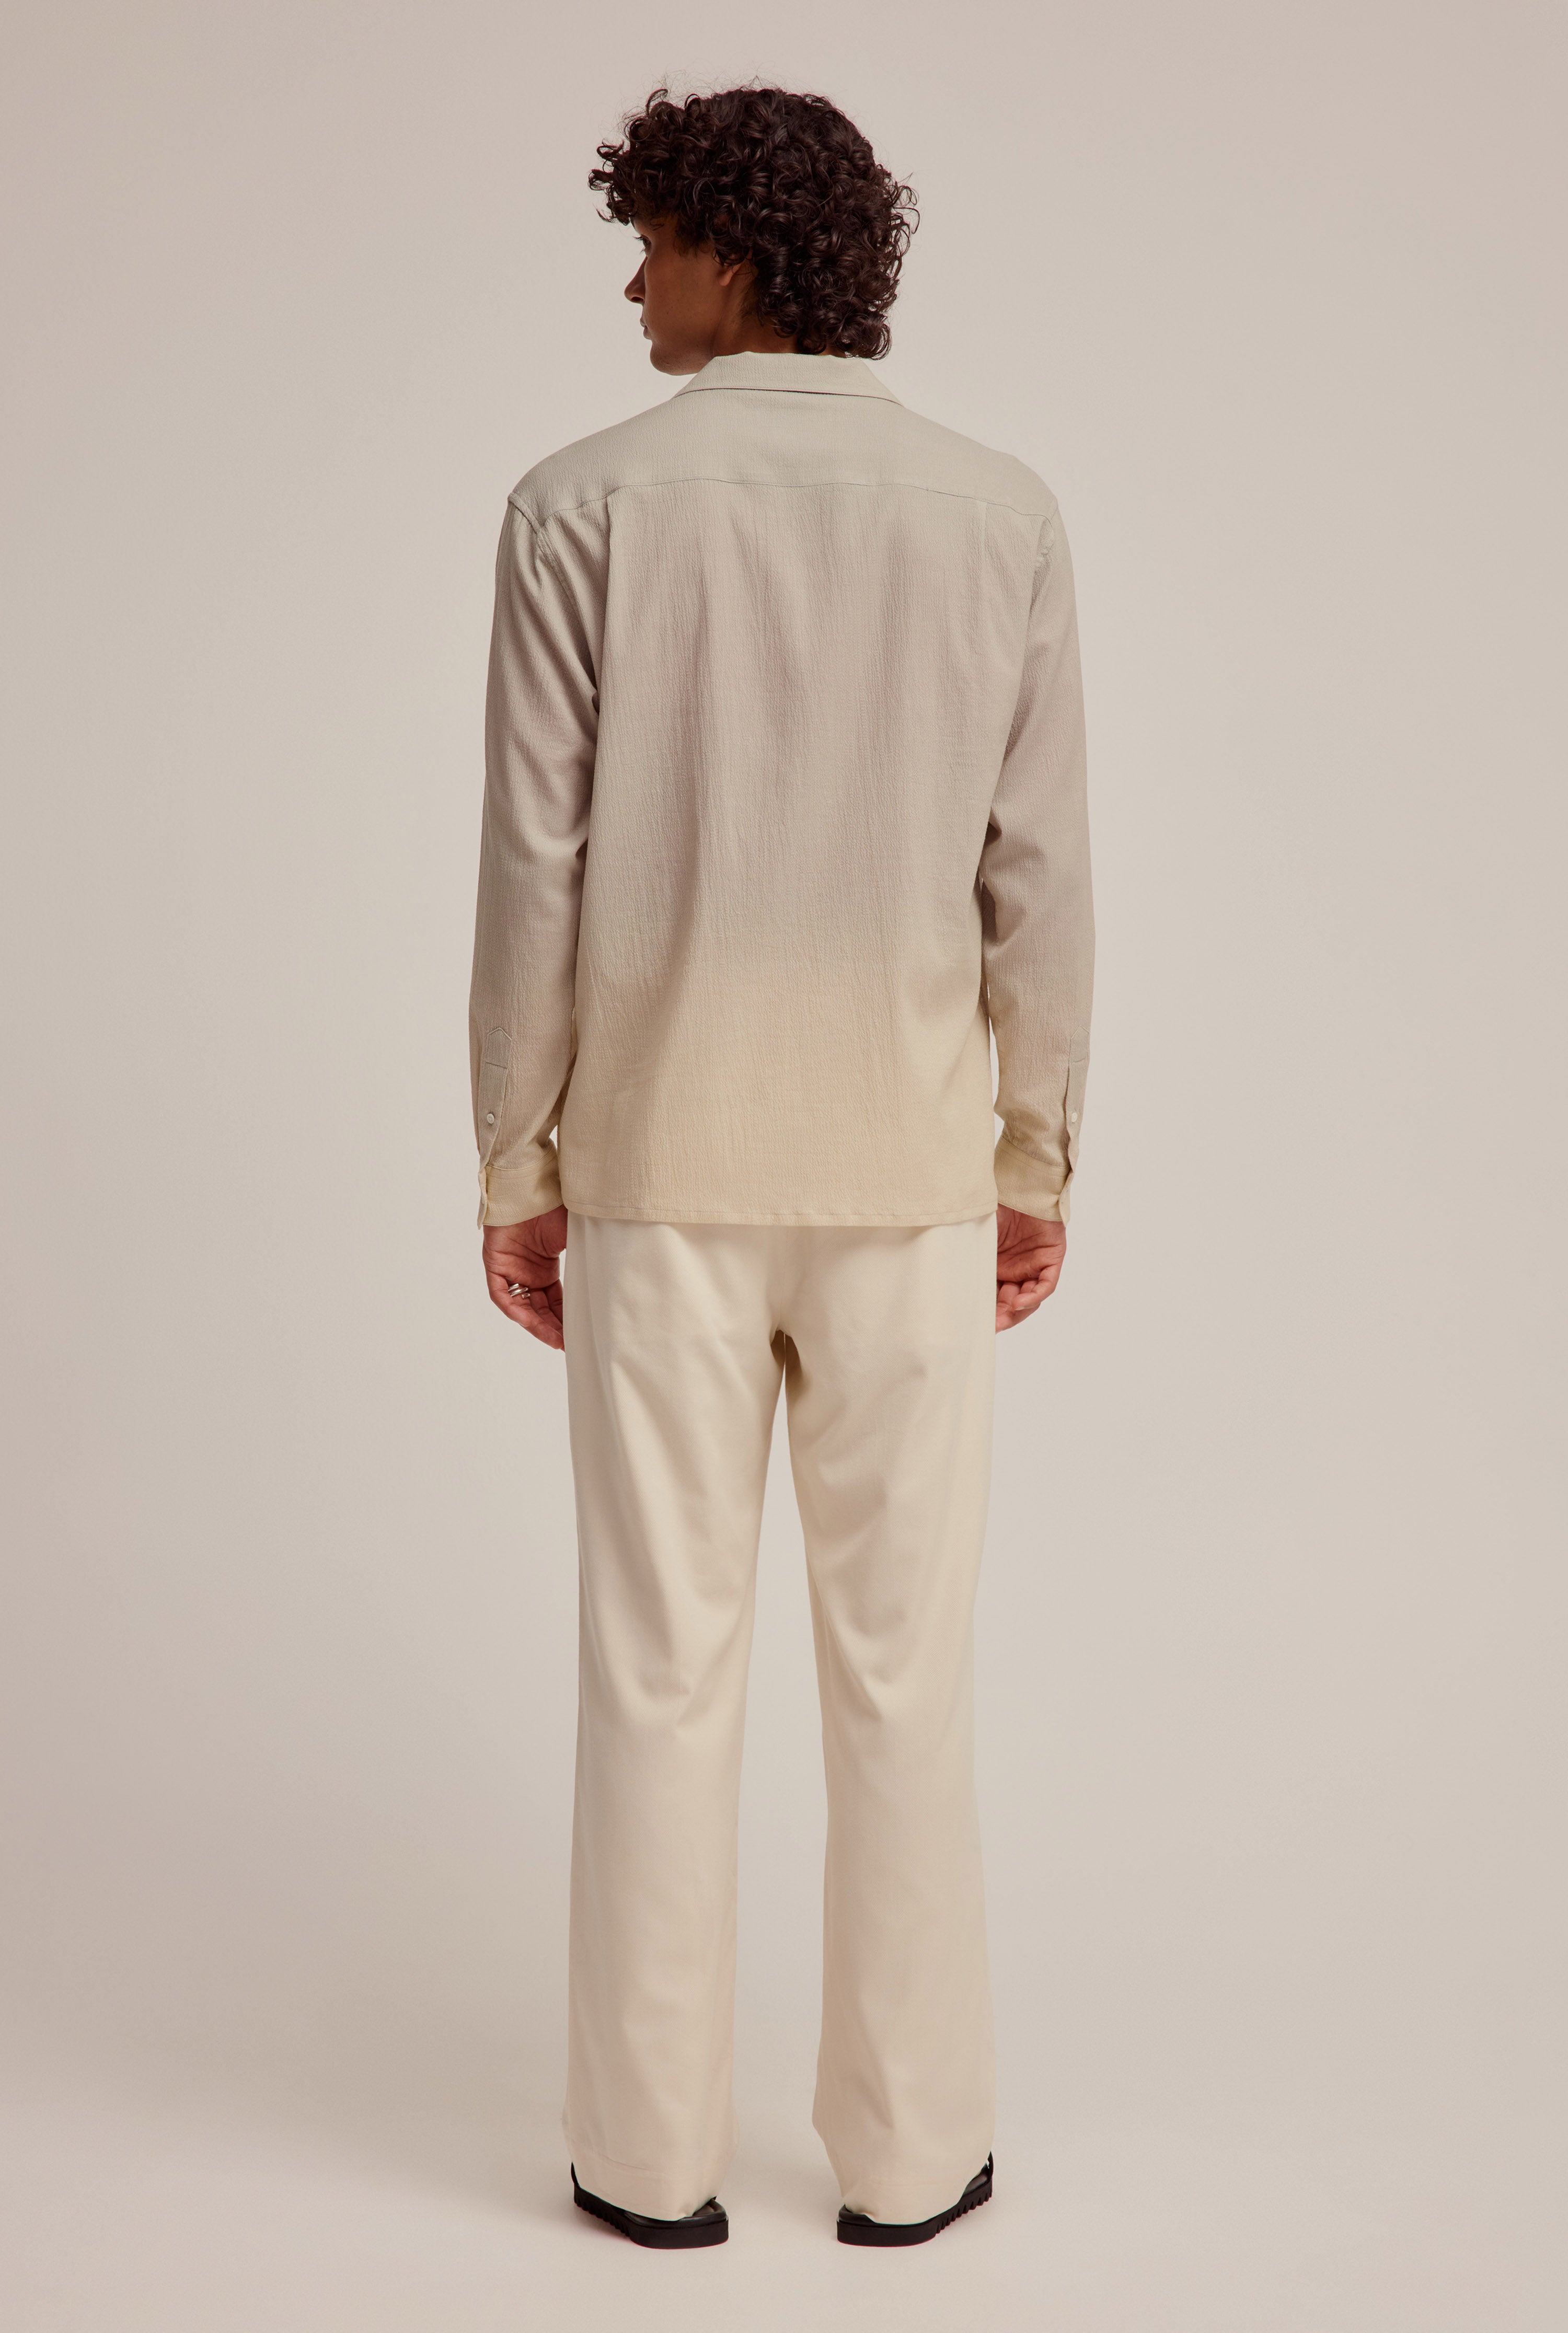 Long Sleeve Cotton Camp Collar Shirt - Fog/Sand Gradient